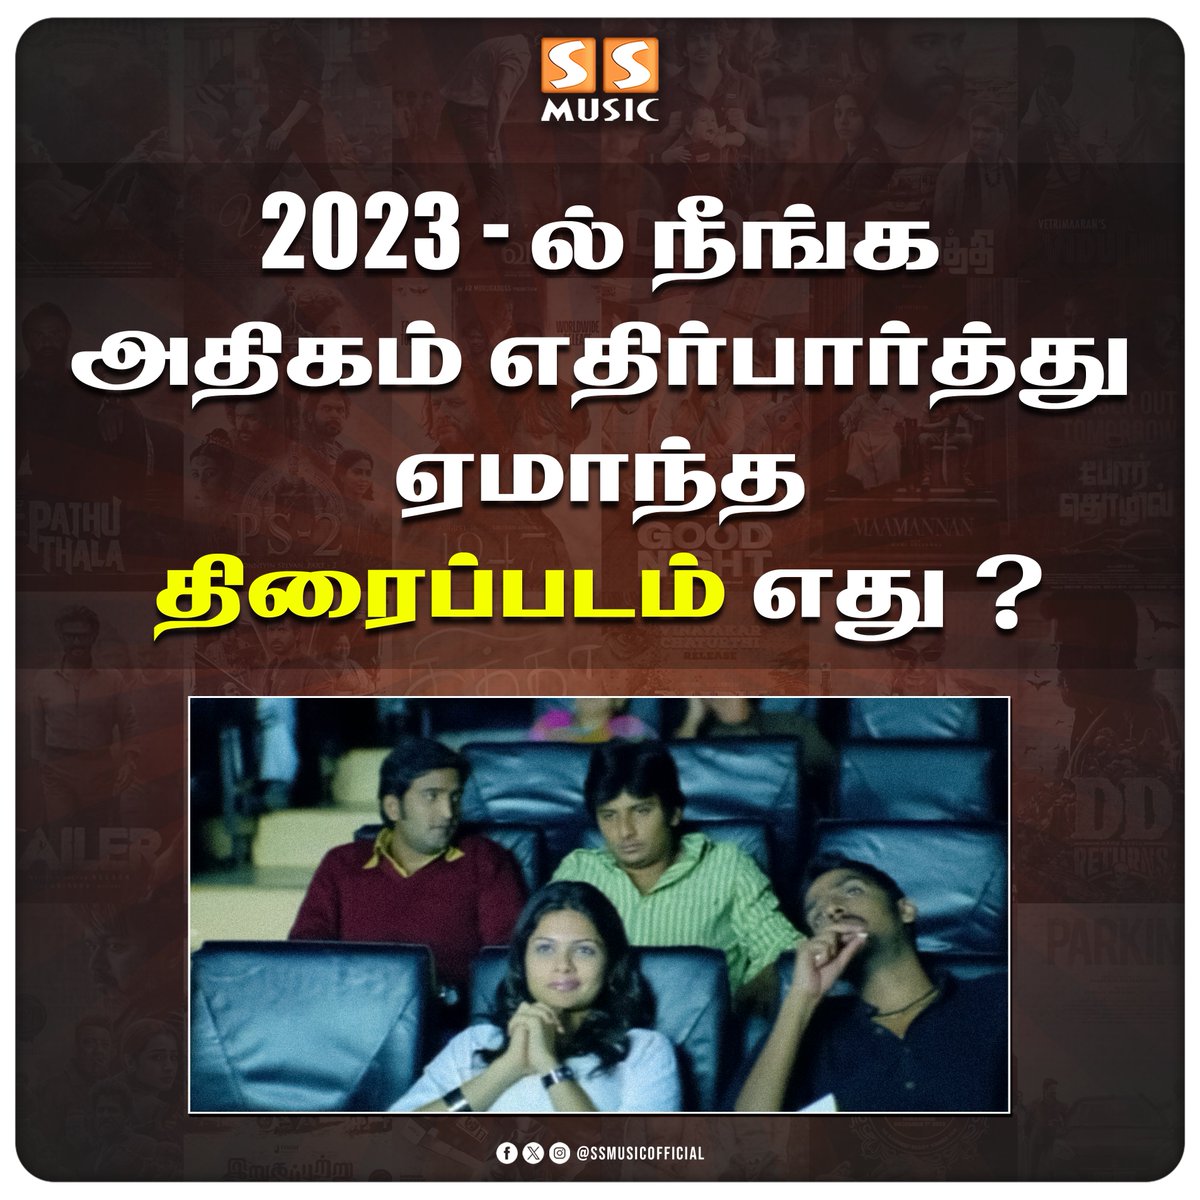 Comment la Sollunga...! 😕
.
#TamilCinema #2023Movies #Kollywood #IndianCinema #ChillTime #ssmusic